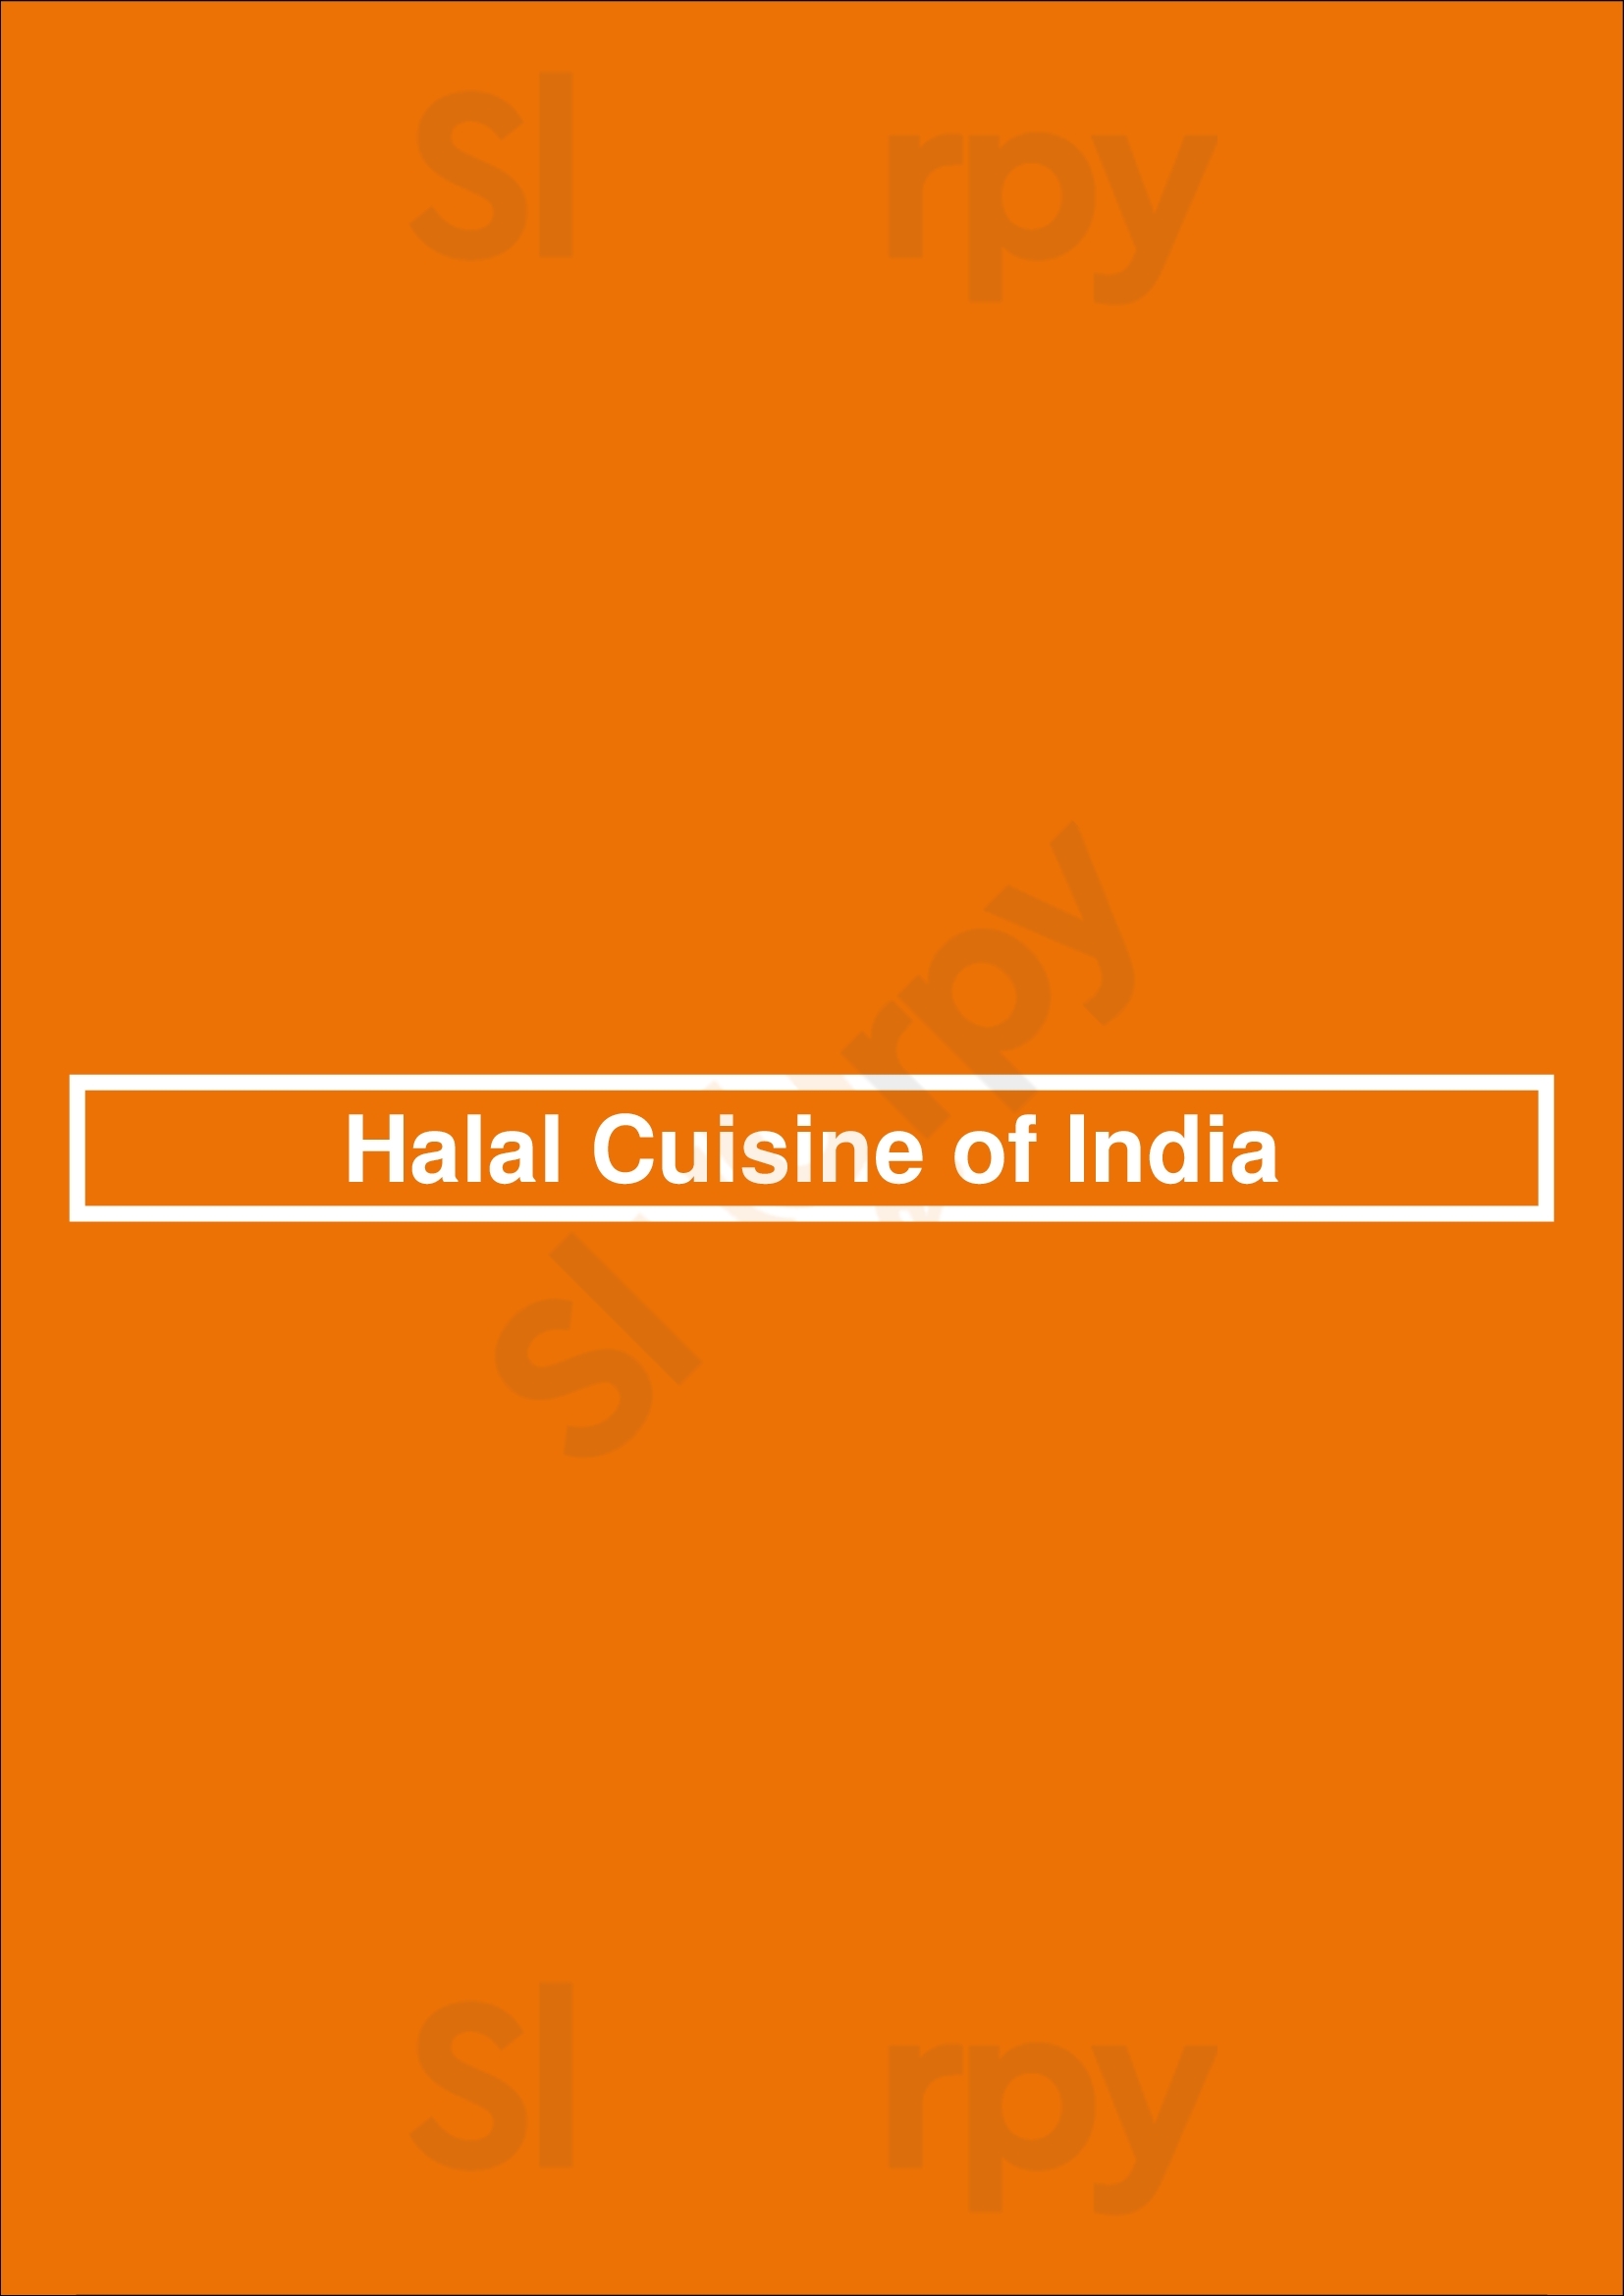 Halal Cuisine Of India Mobile Menu - 1